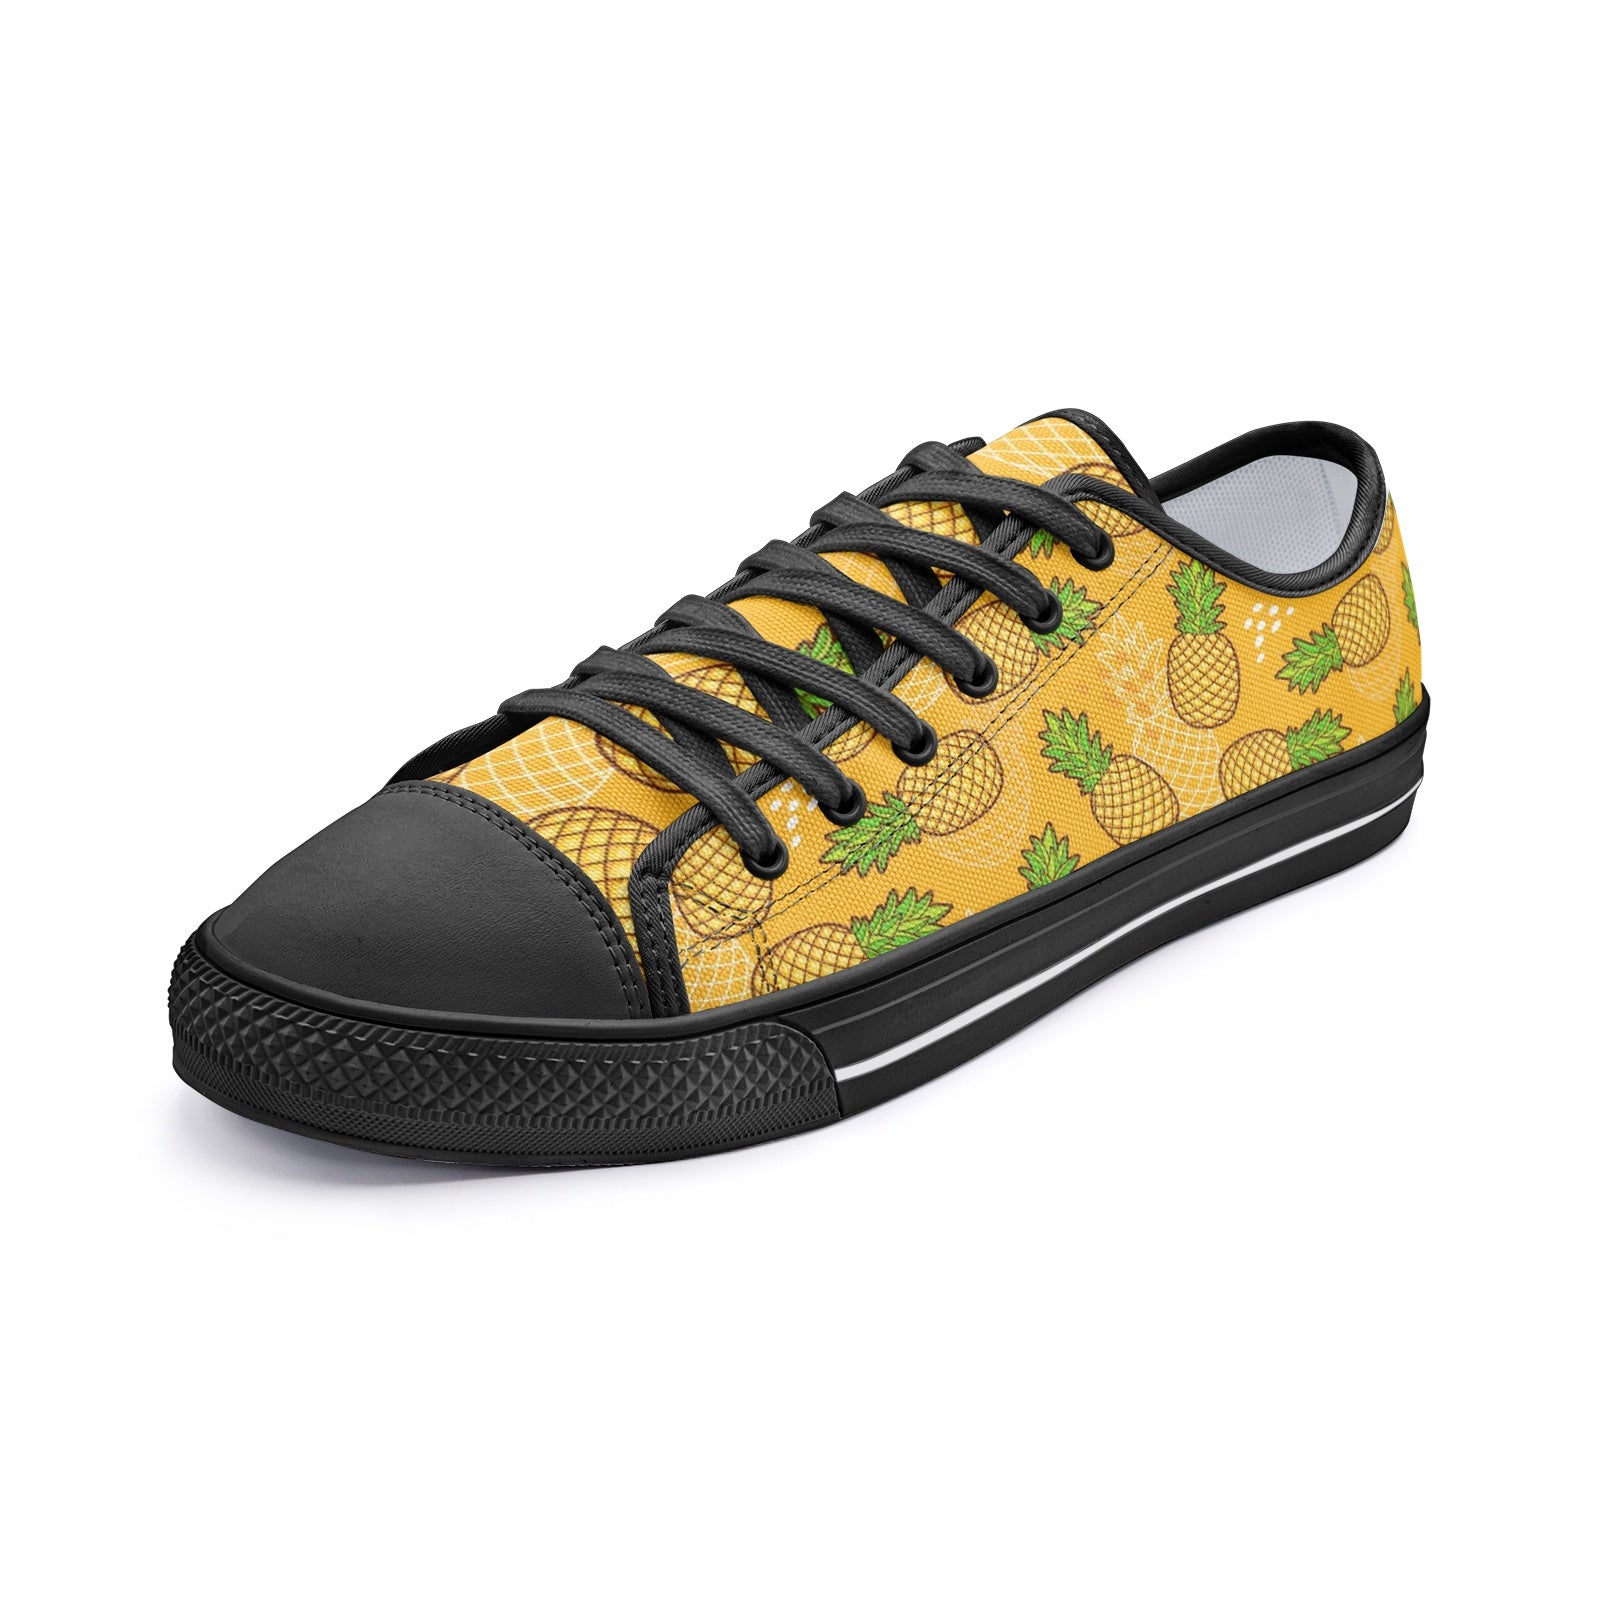 Pineapple Unisex Low Top Canvas Shoes